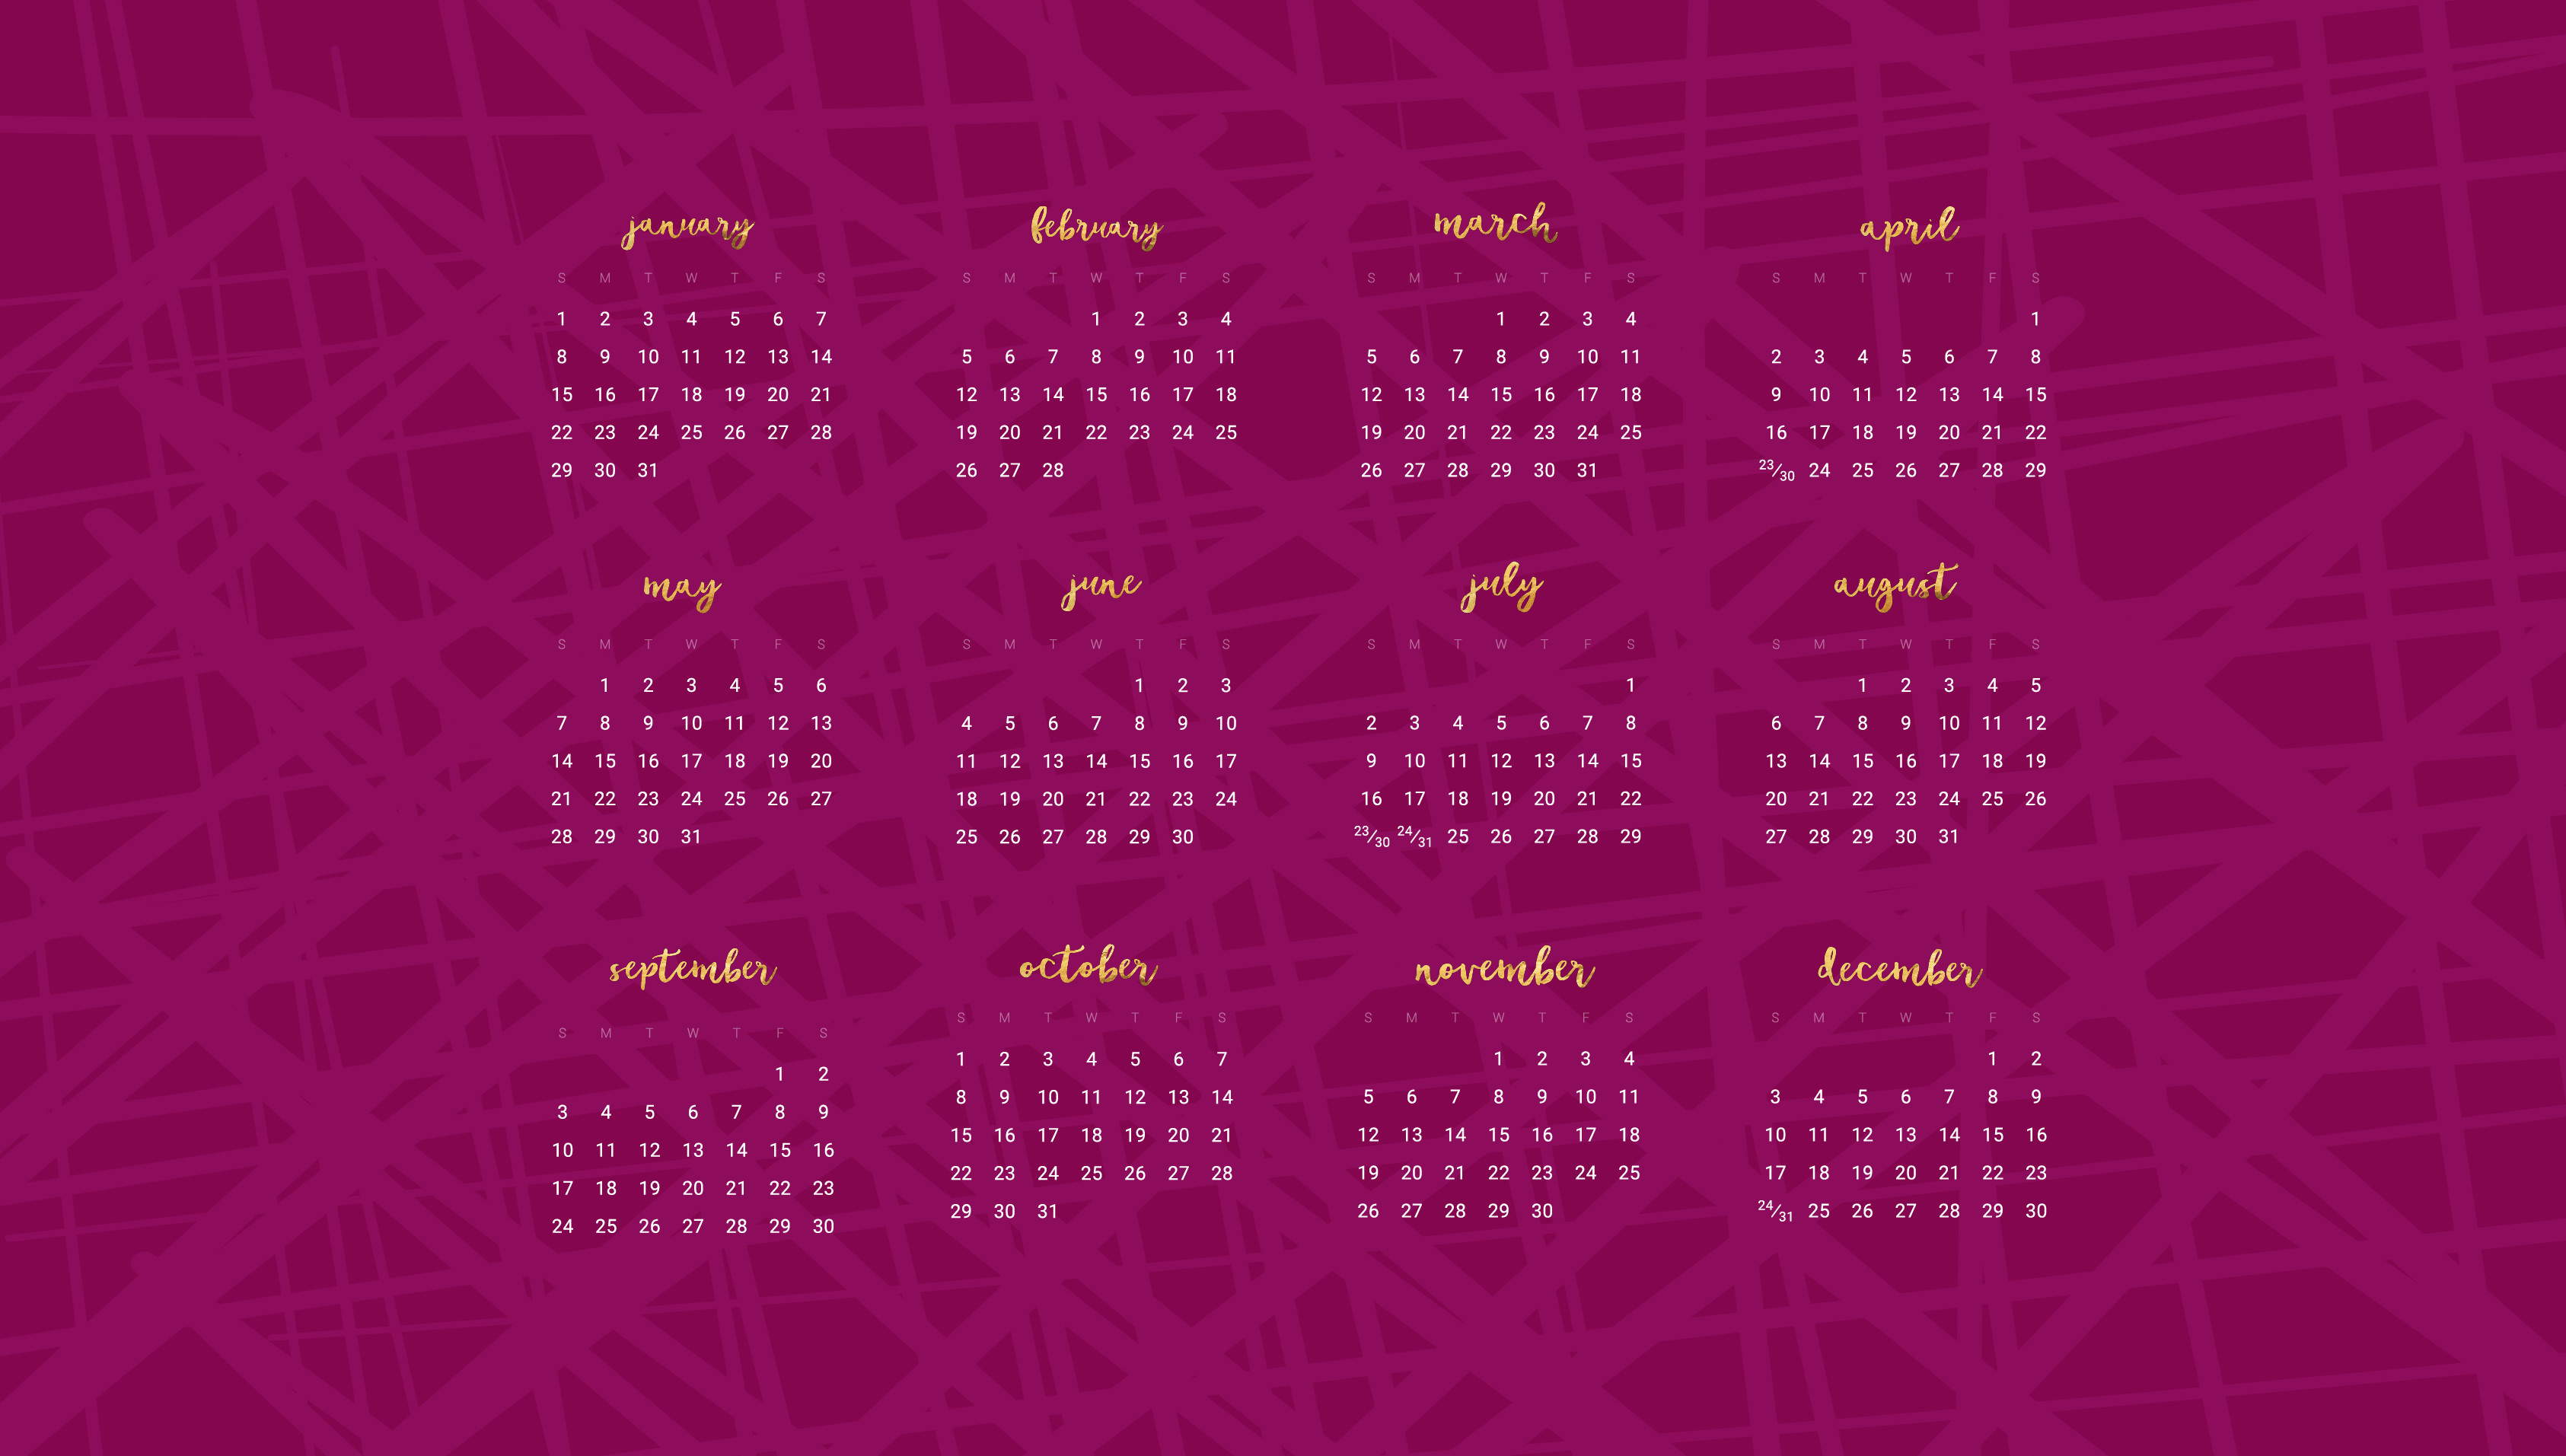 3371x1913 Free 2017 desktop wallpaper calendars